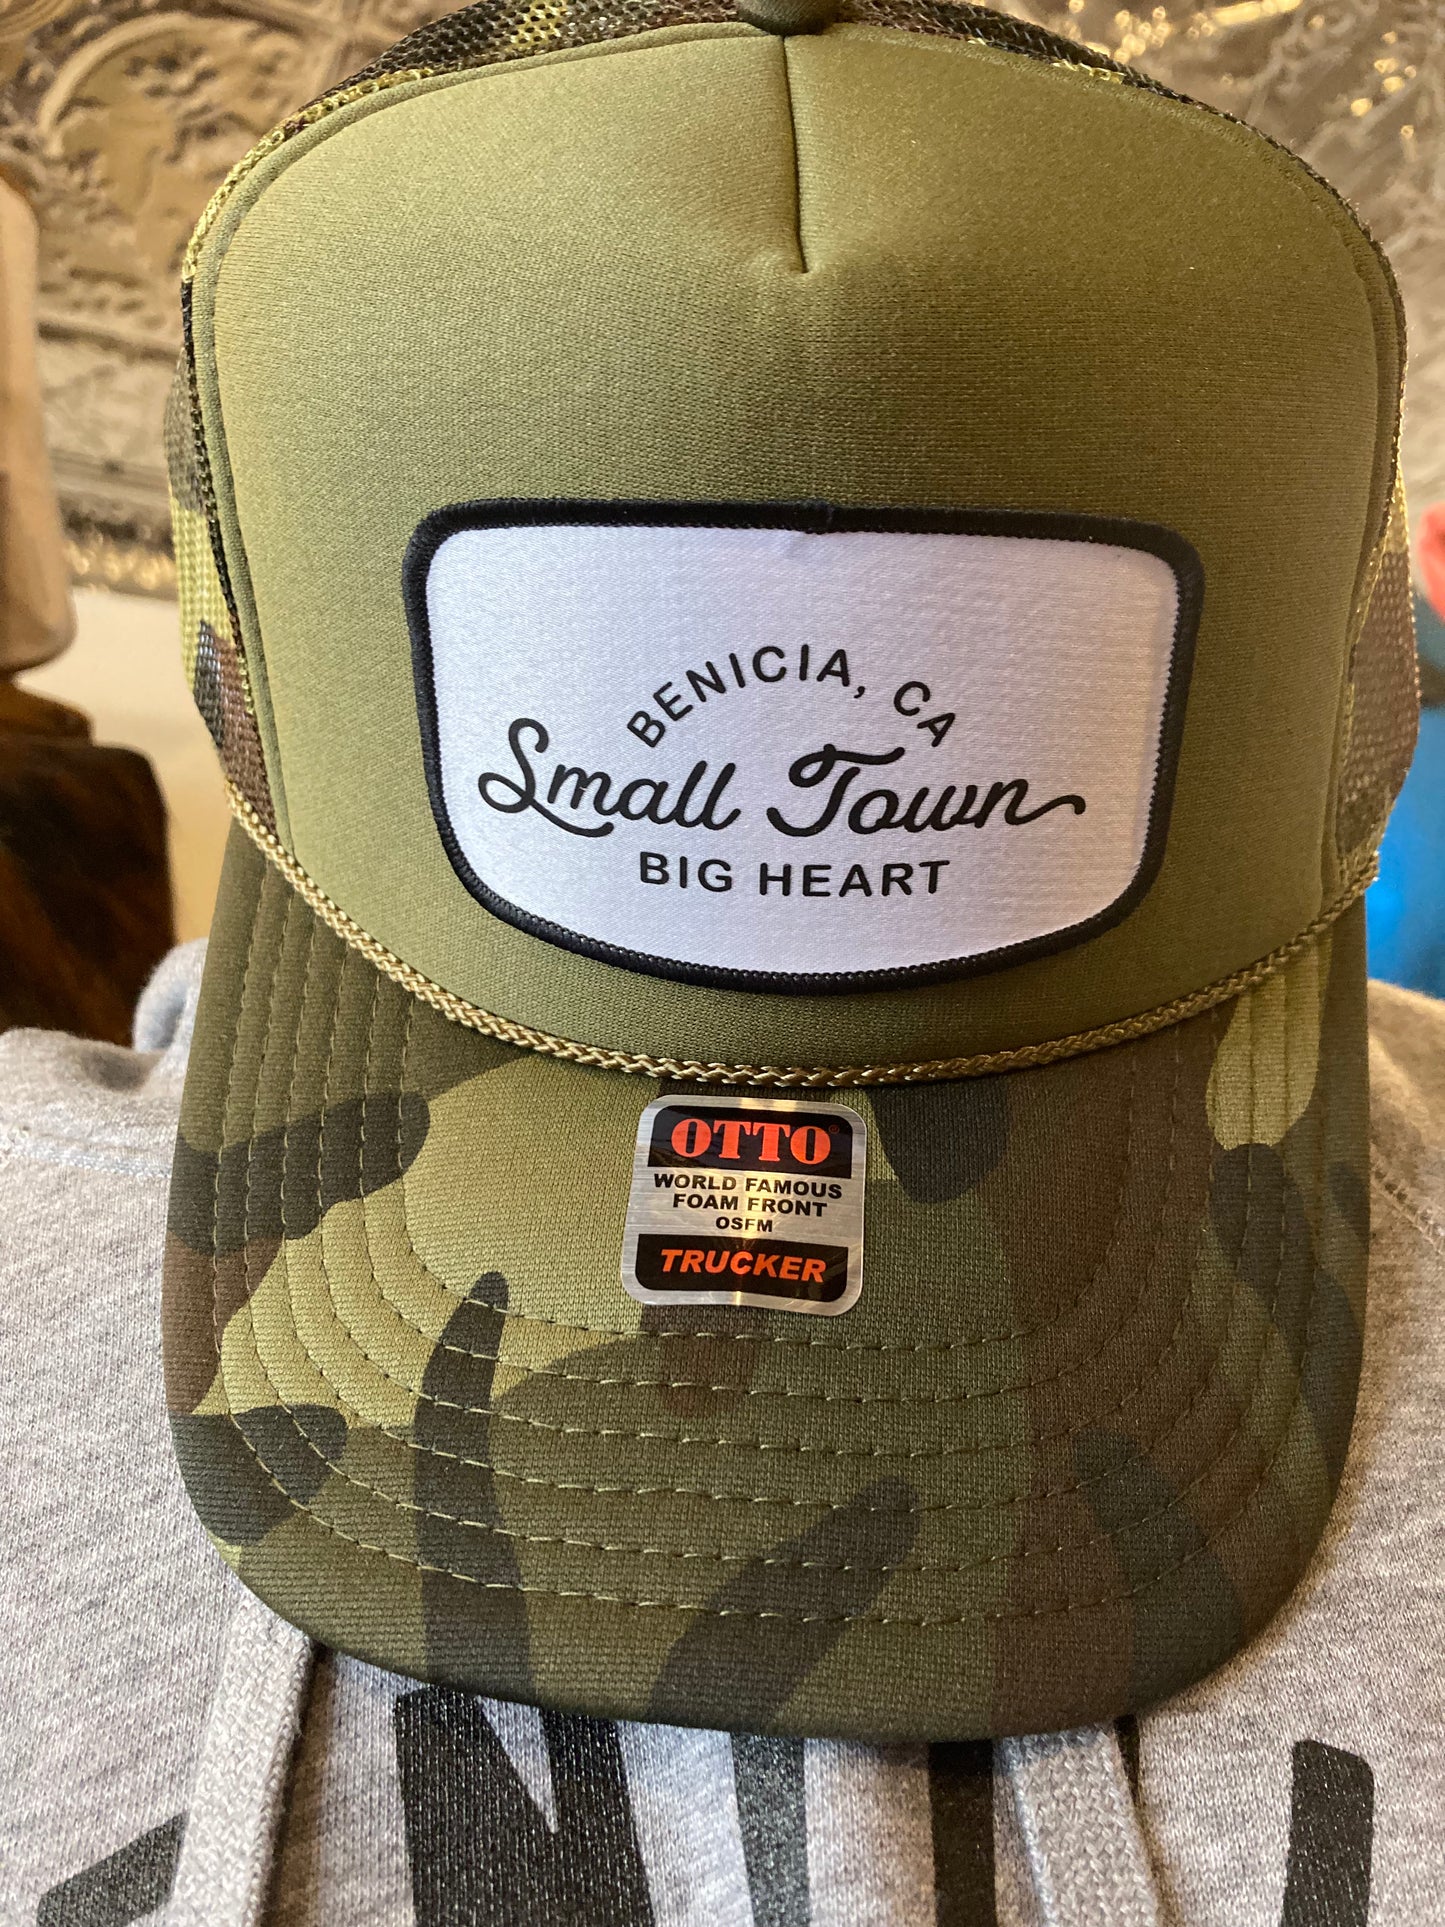 Small Town Big Heart Benicia Trucker Hat